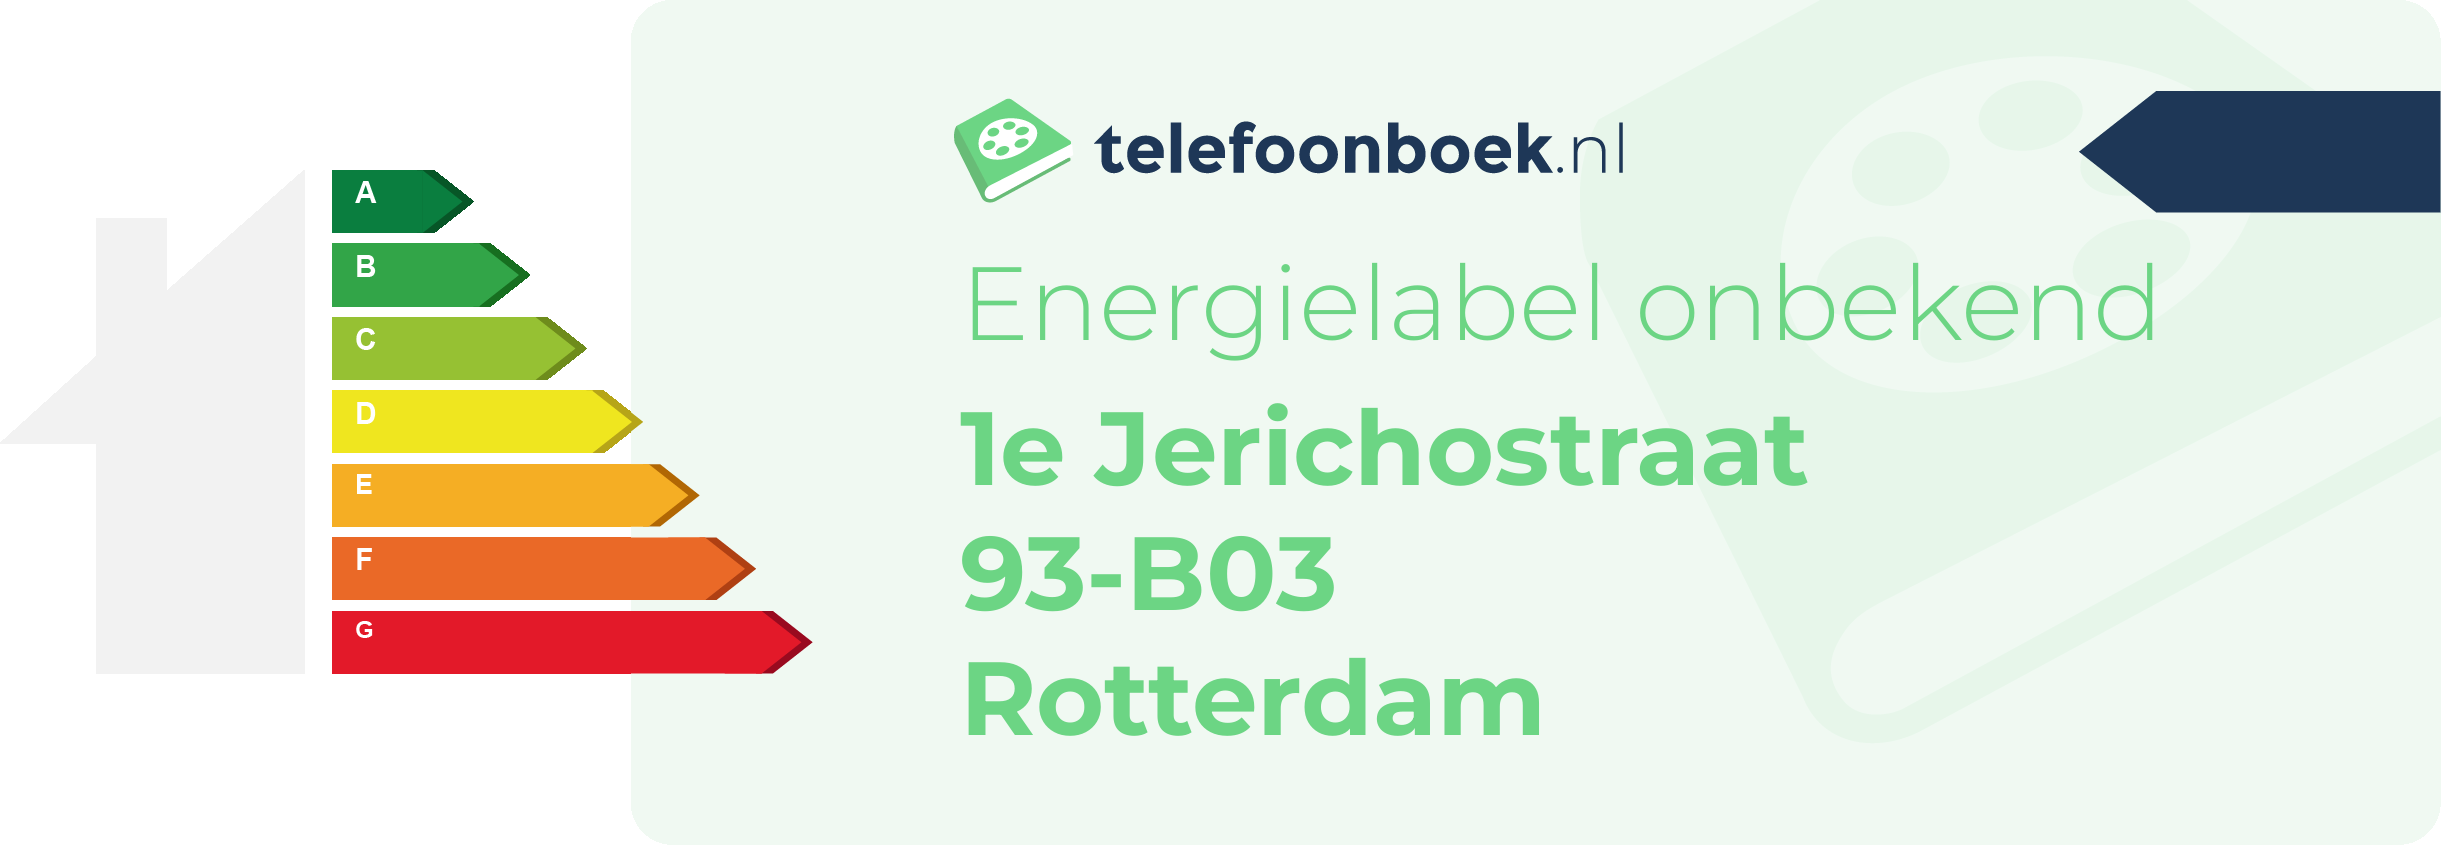 Energielabel 1e Jerichostraat 93-B03 Rotterdam